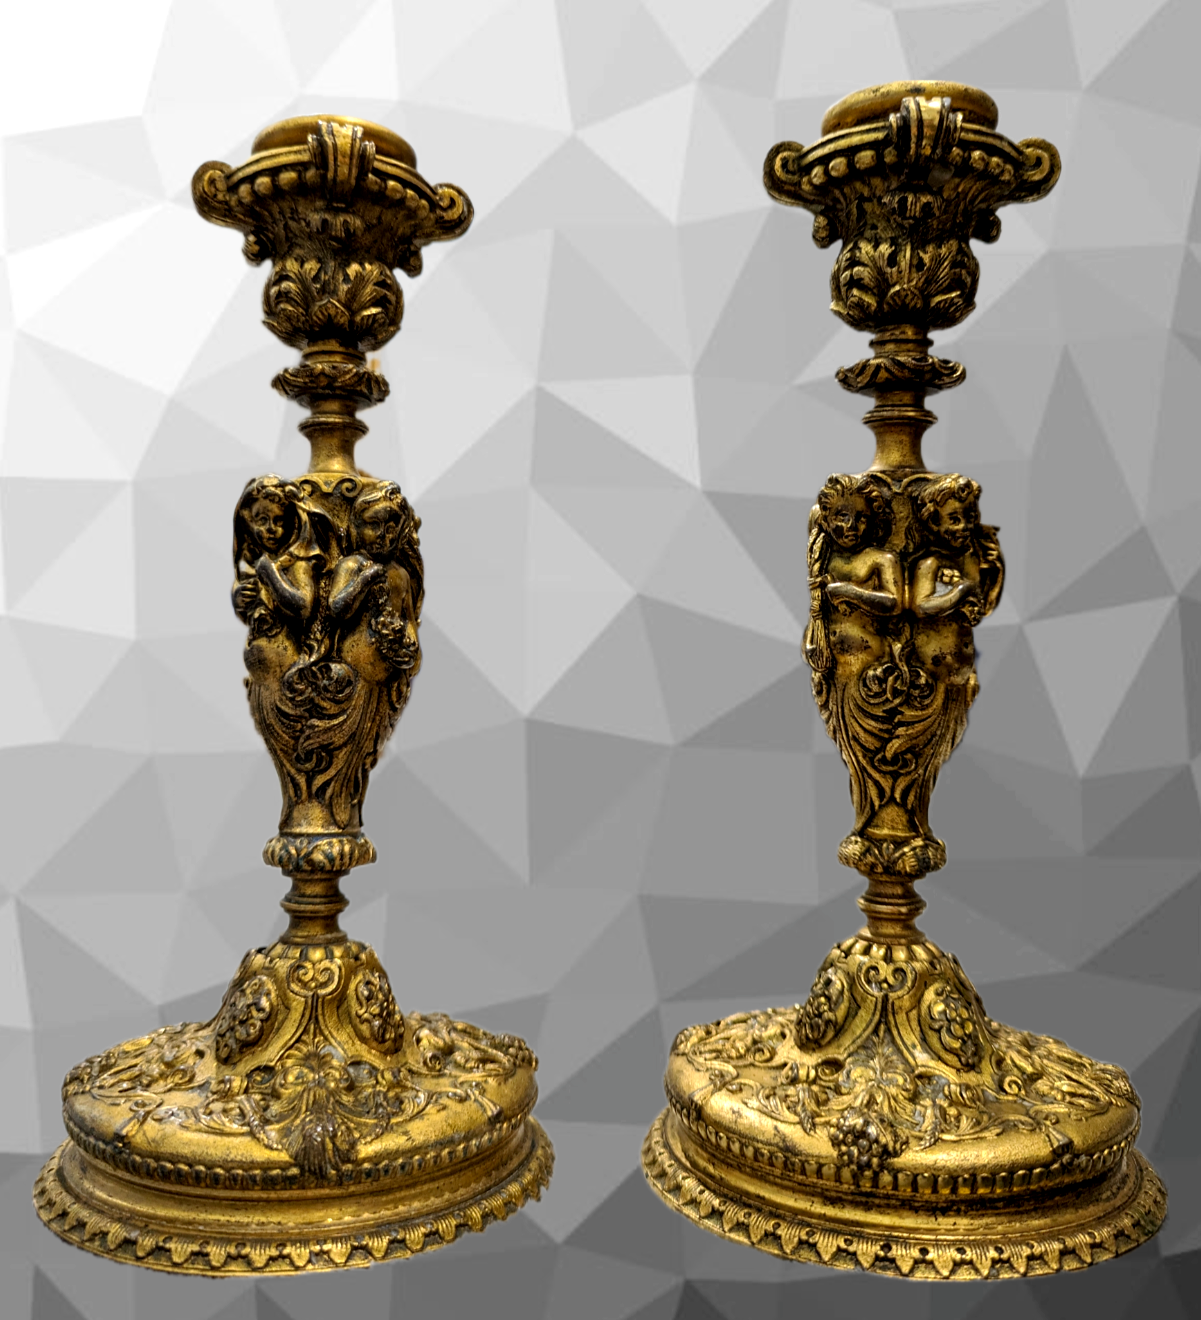 Antique French 19th Century Gilt Bronze Four Seasons Cherub Candlestick Holders